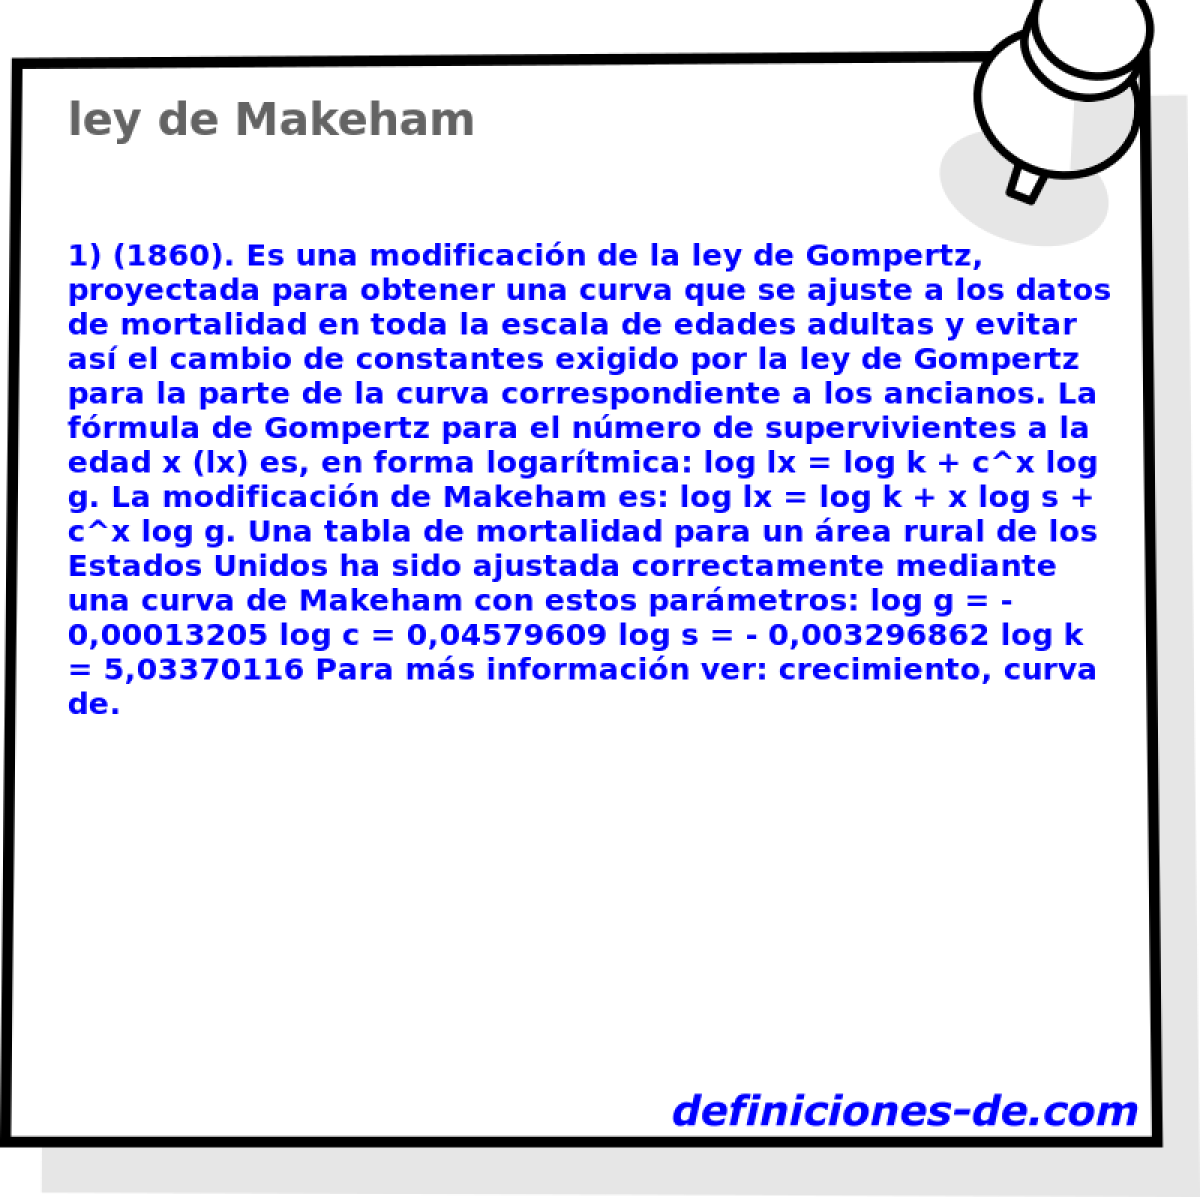 ley de Makeham 